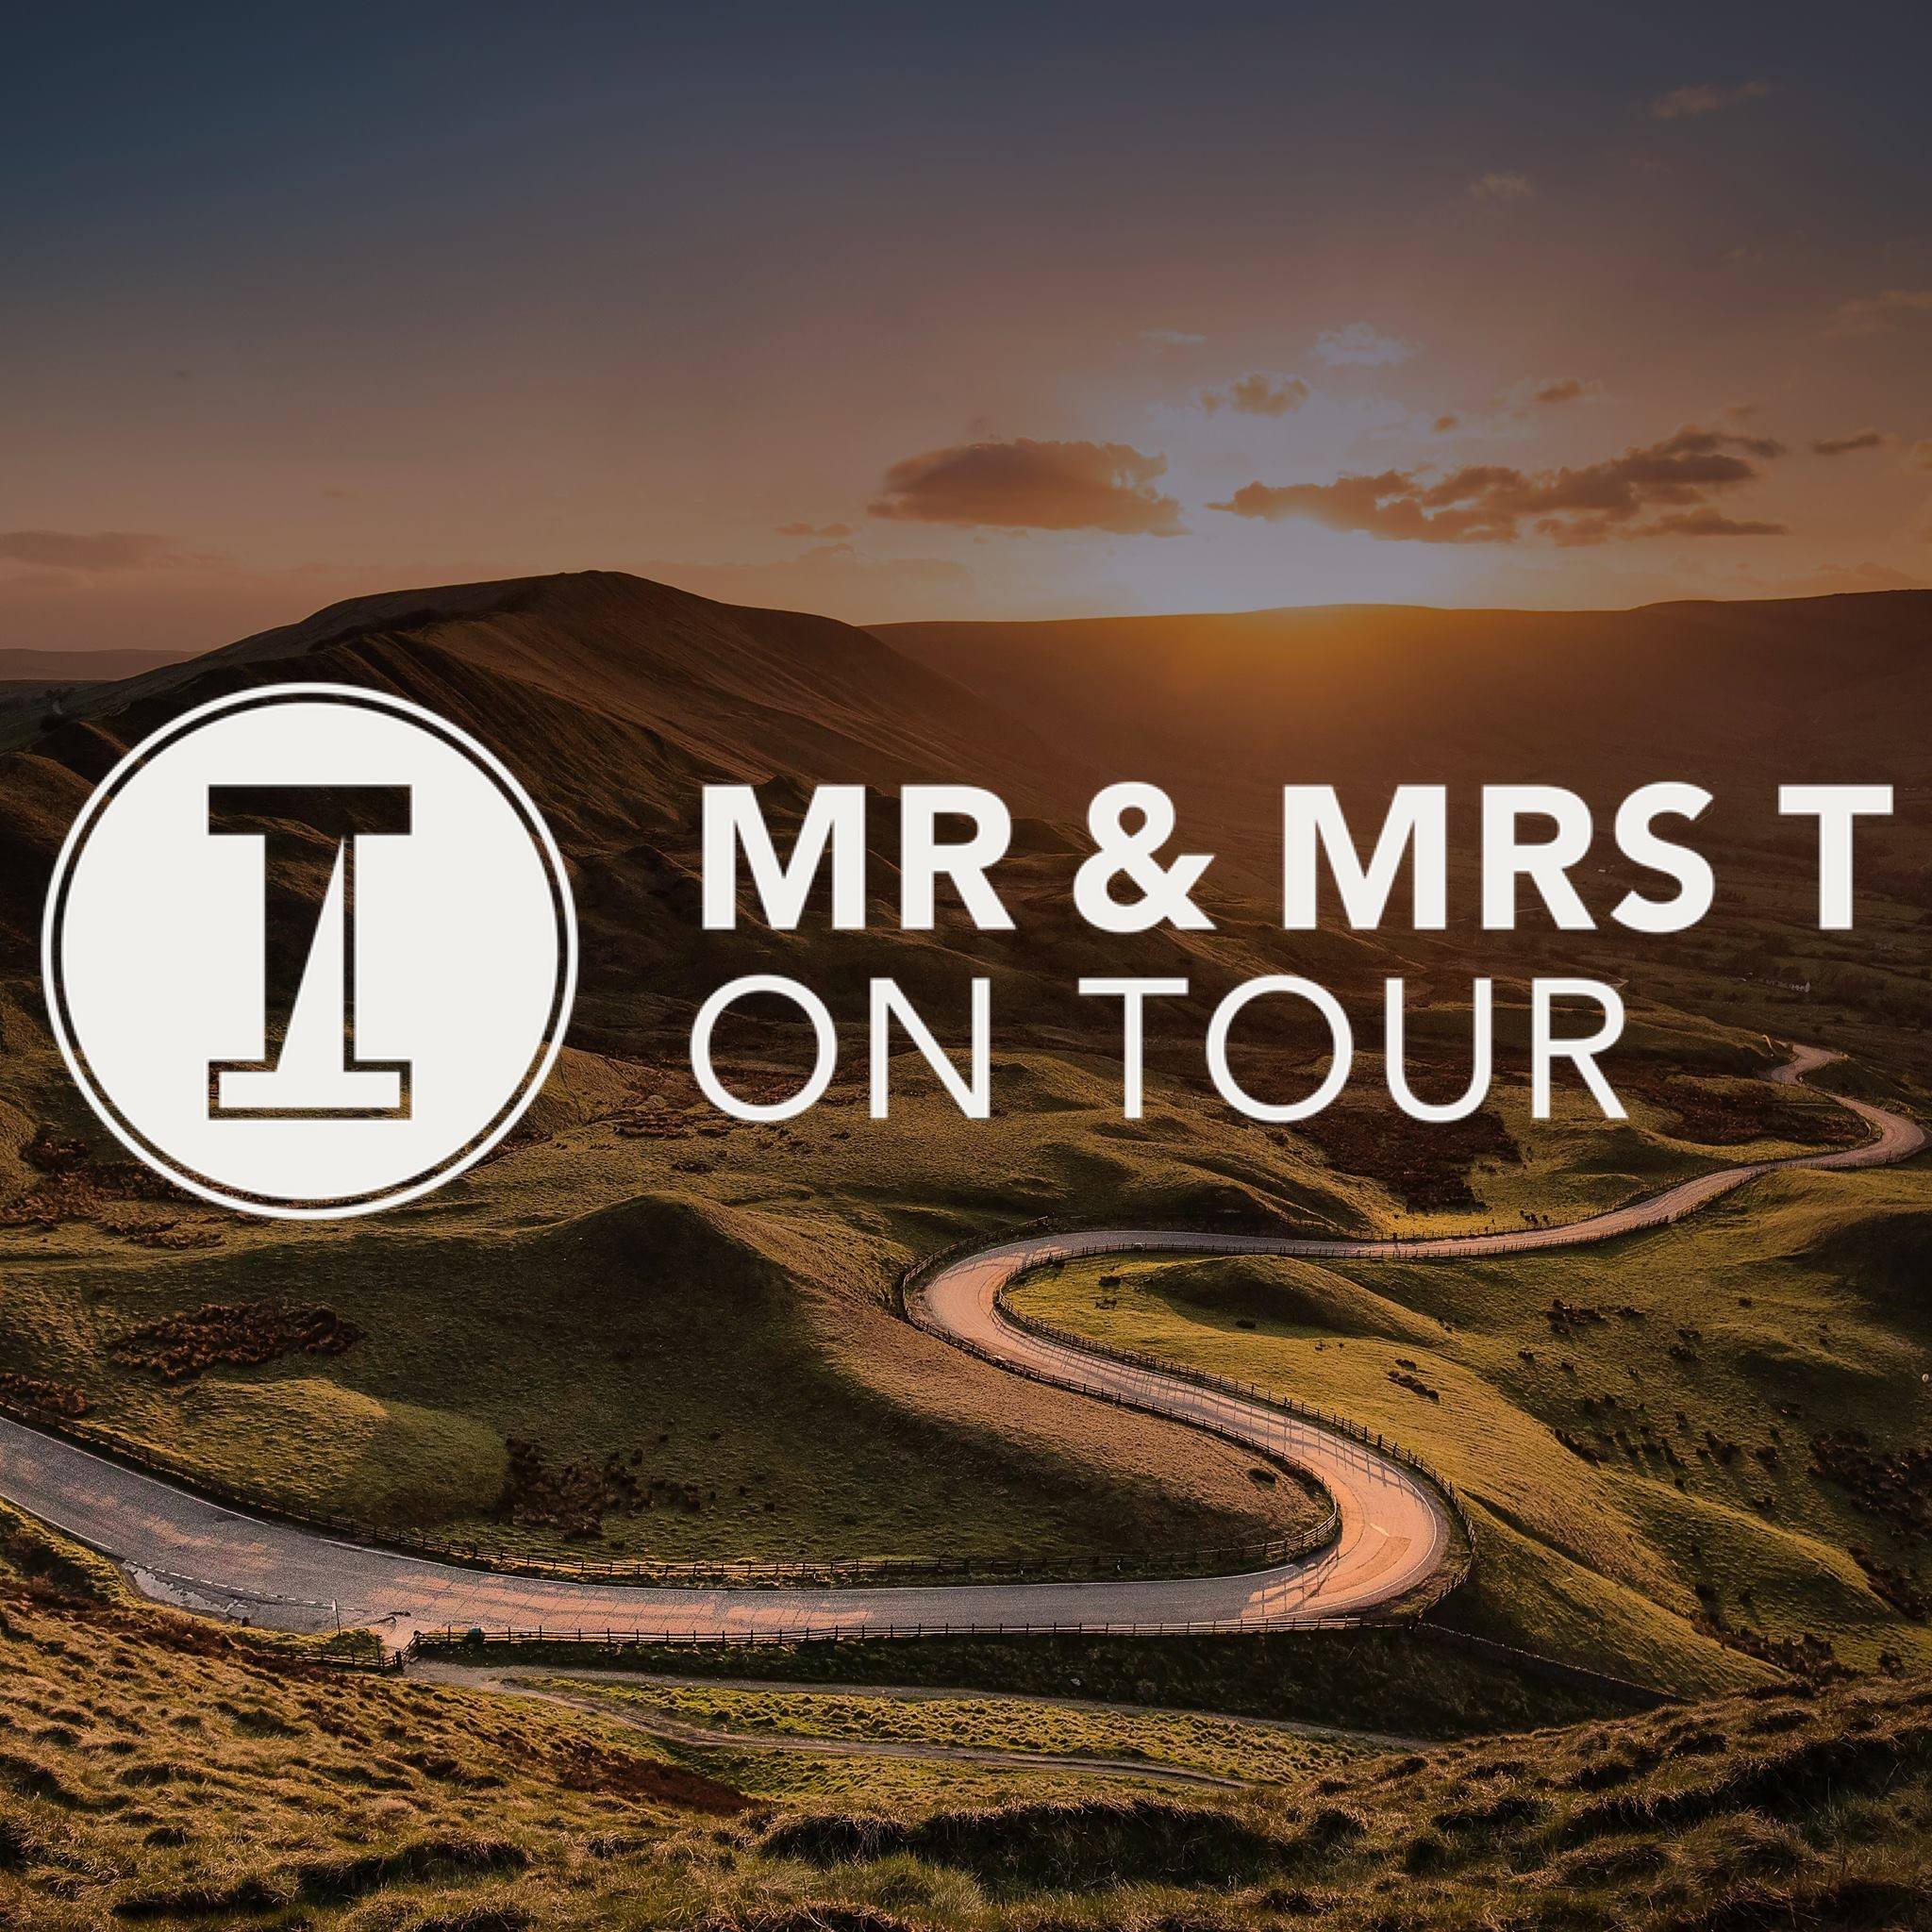 Møt Mr. and Mrs. T on tour - i Oslo